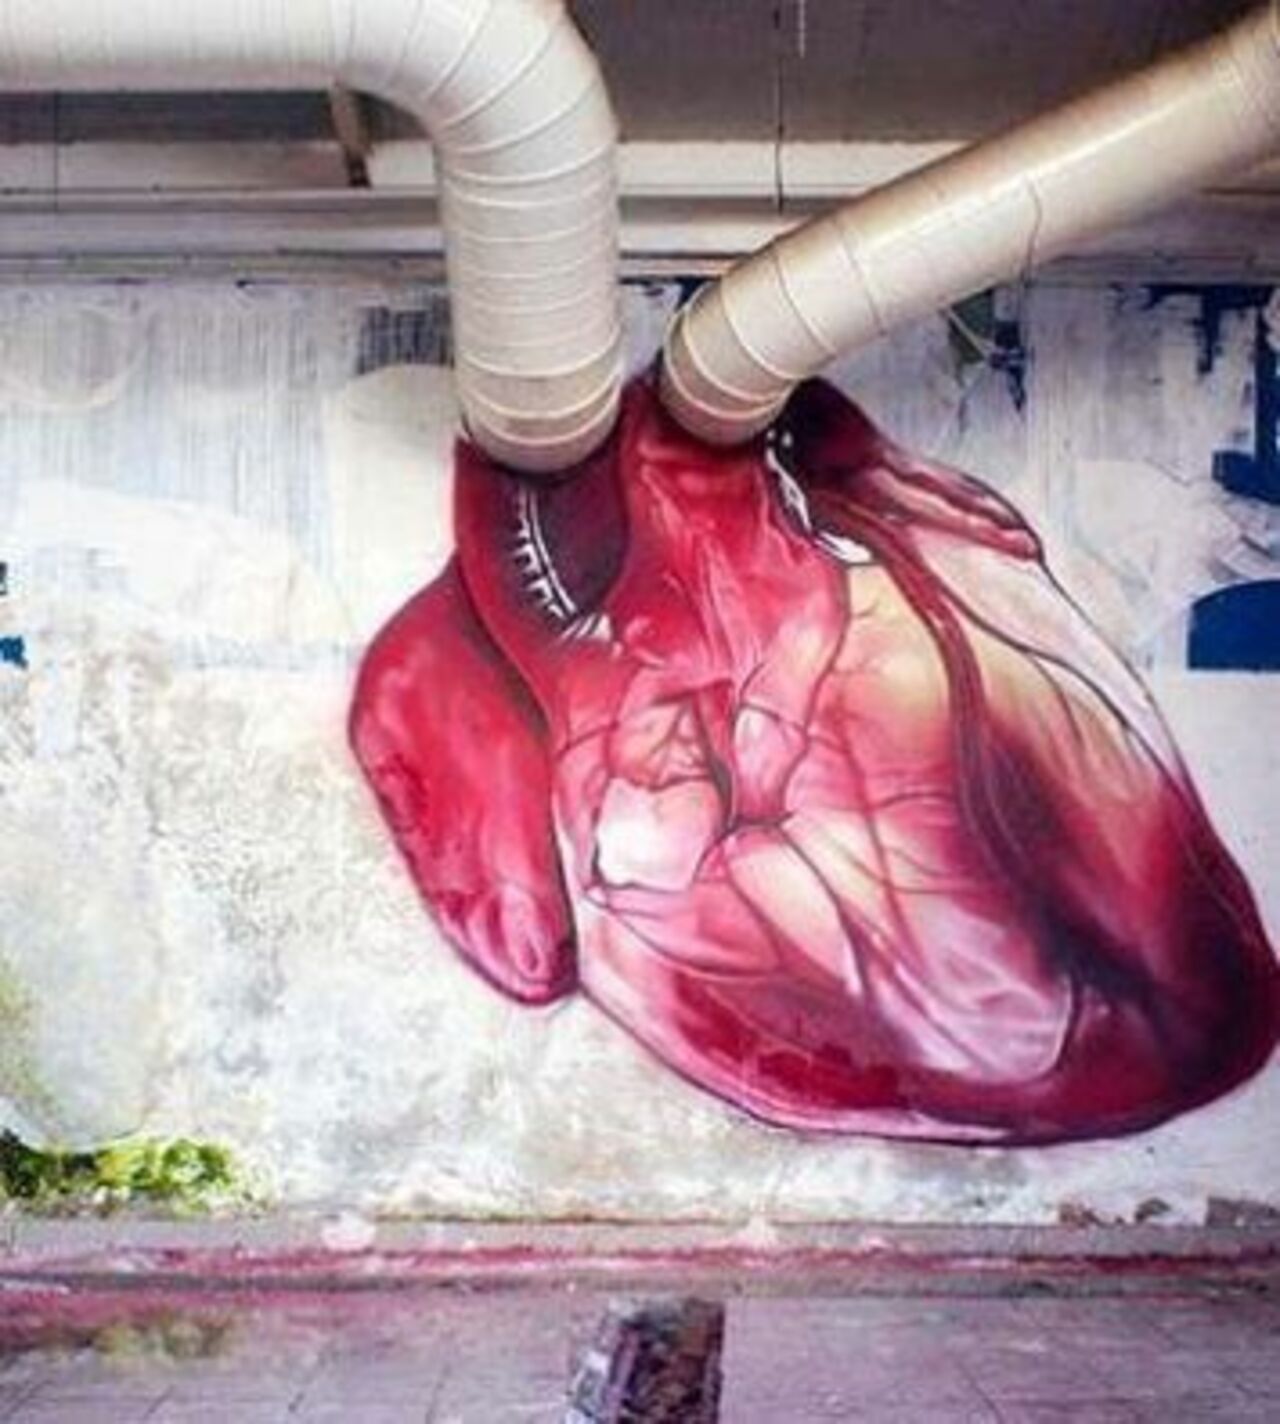 #Heart – Creative #Streetart | Be ▲rtist - Be ▲rt https://beartistbeart.com/2016/08/22/heart-creative-streetart/?utm_campaign=crowdfire&utm_content=crowdfire&utm_medium=social&utm_source=twitter https://t.co/Hirc0eHxnZ